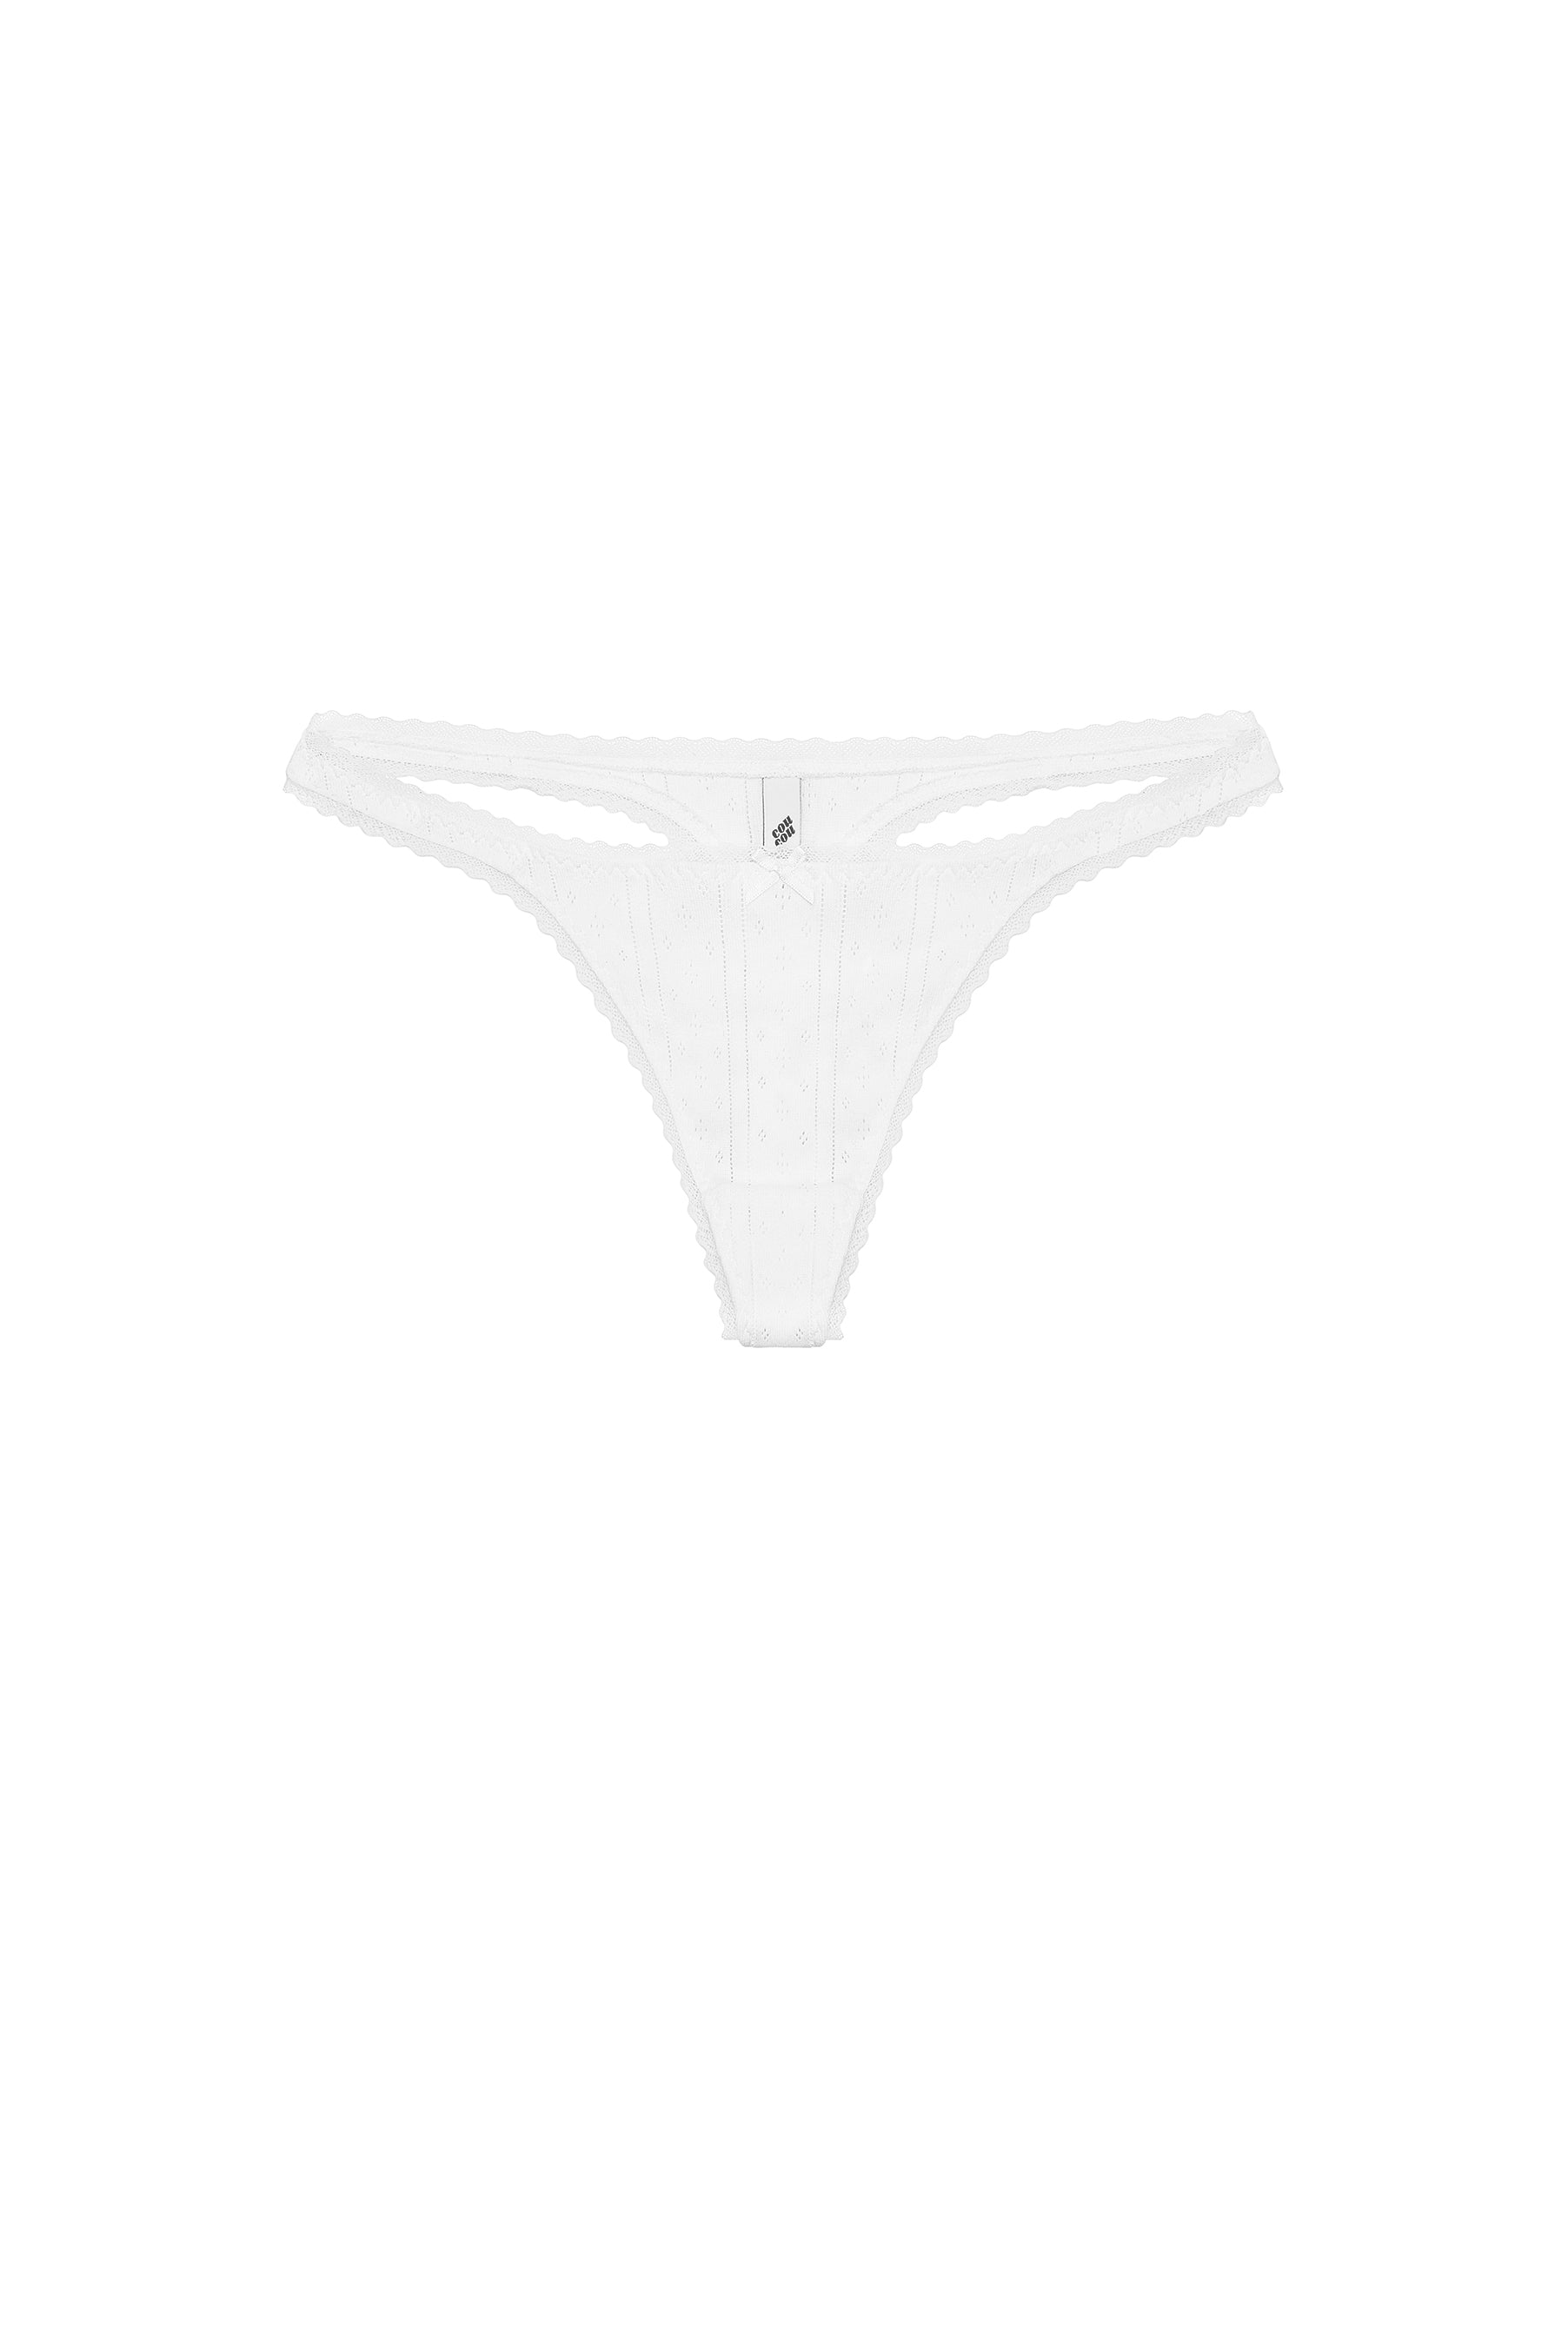 CULAYII Postpartum Underwear for Women High Waisted Cotton